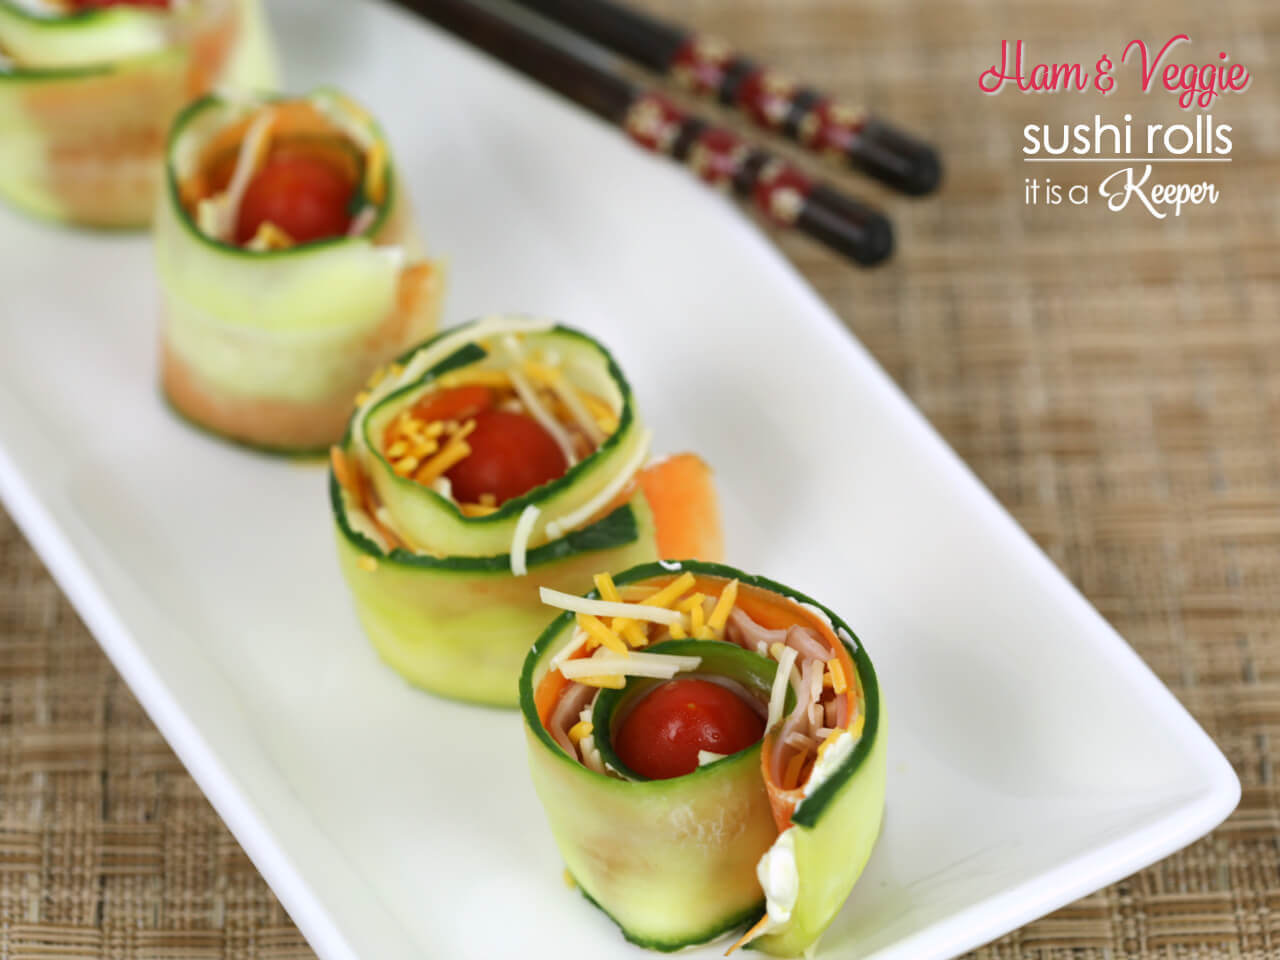 Ham and Veggie Sushi Rolls - these fun sushi inspired rolls are a fun lunchbox idea